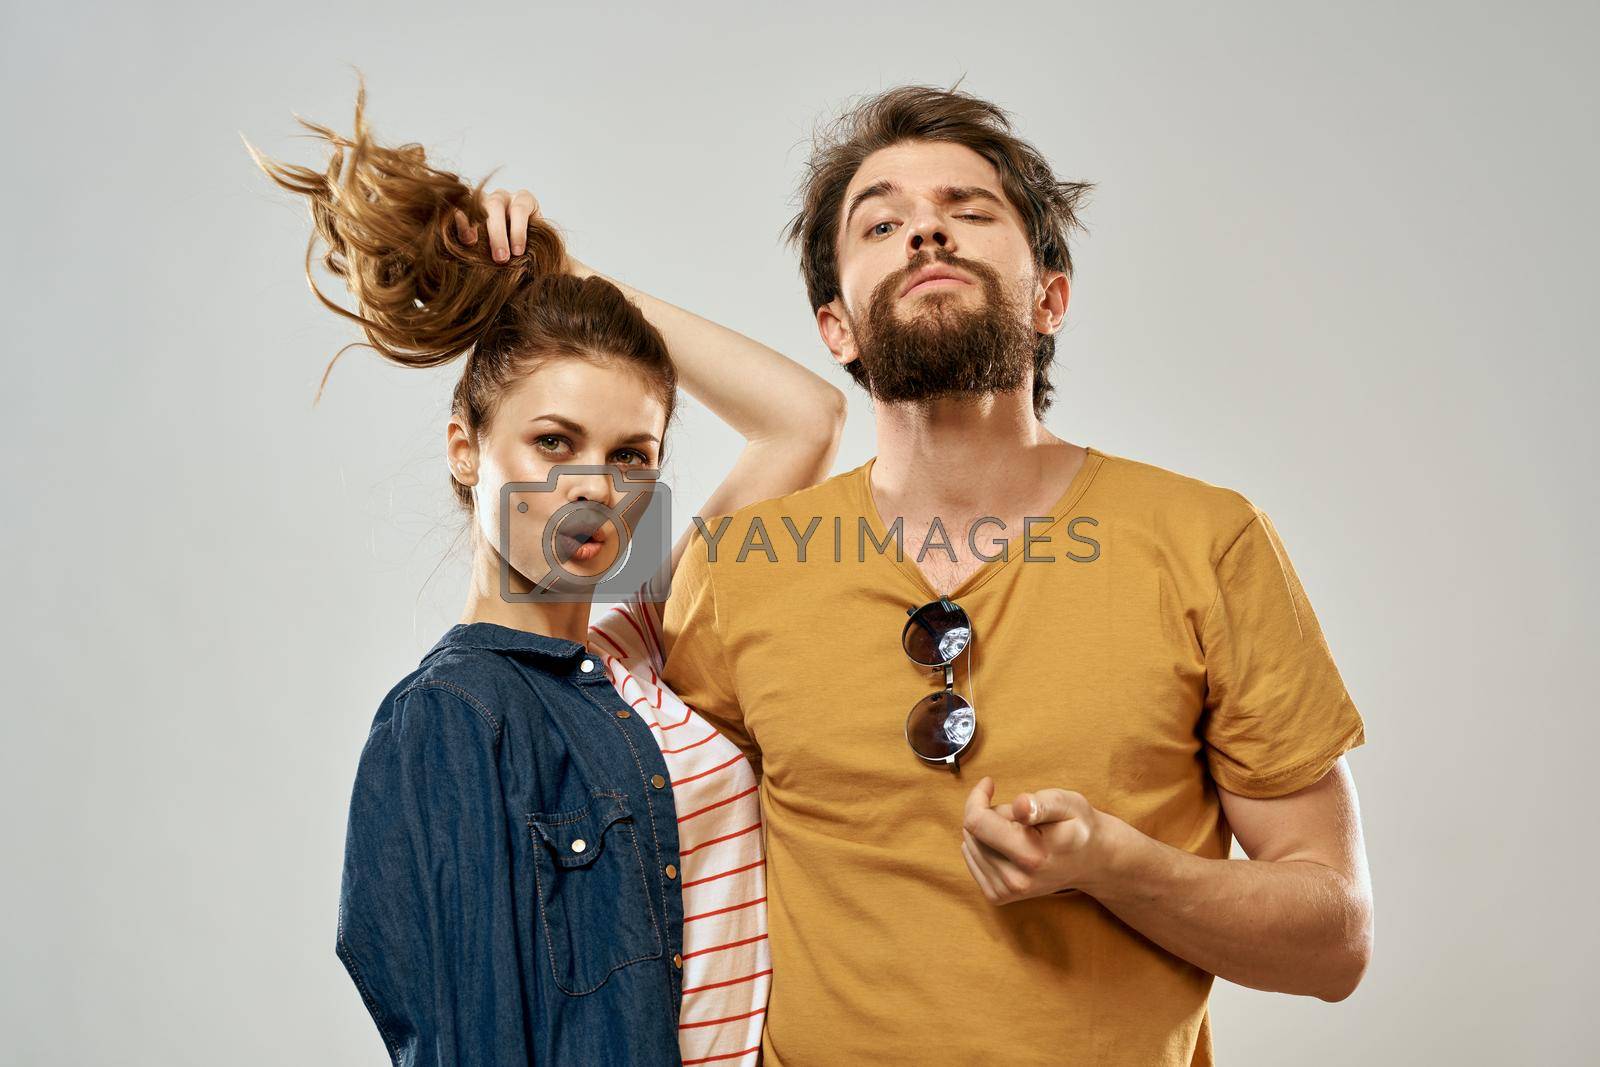 Young couple lifestyle emotions communication fashion light background. High quality photo